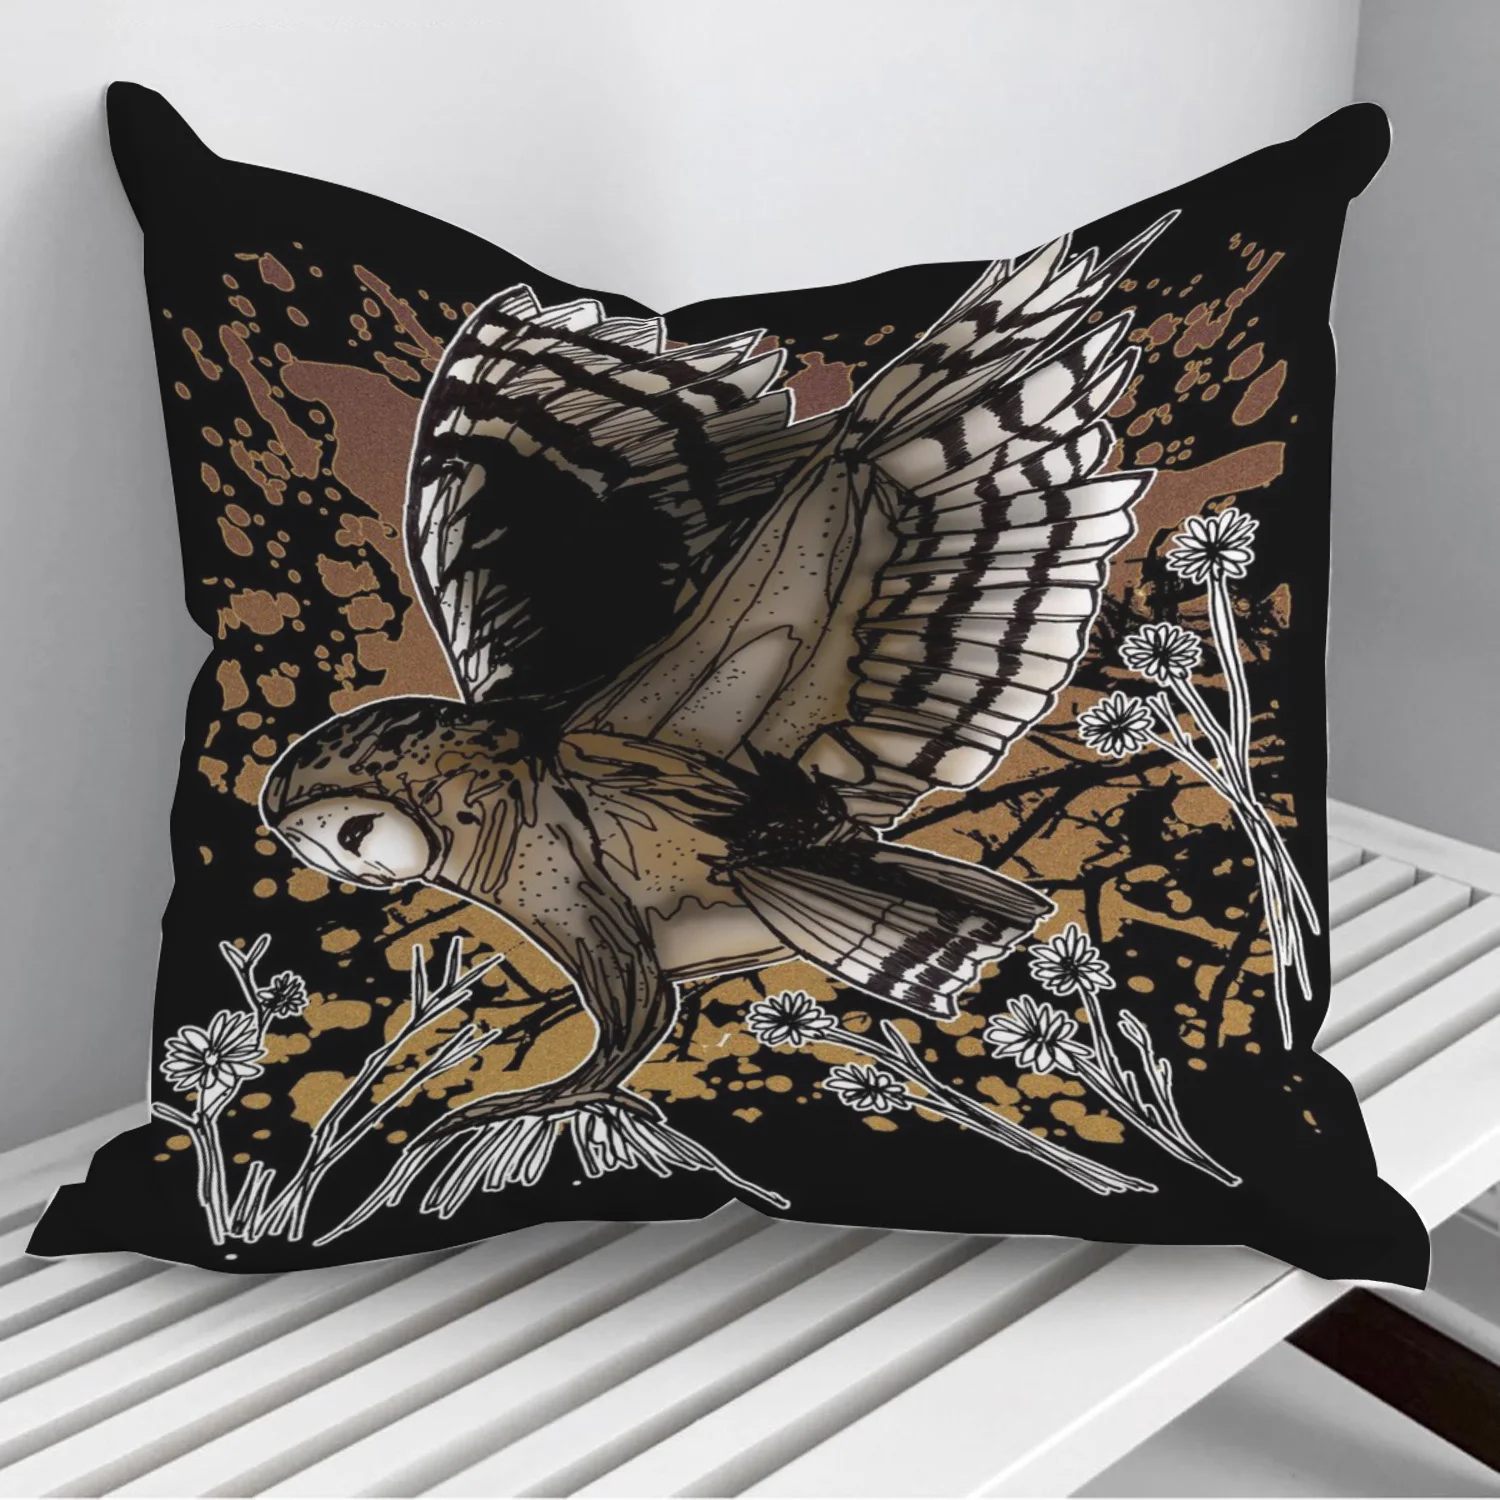 

Barn Owl Stance Throw Pillows Cushion Cover On Sofa Home Decor 45*45cm 40*40cm Gift Pillowcase Cojines Dropshipping